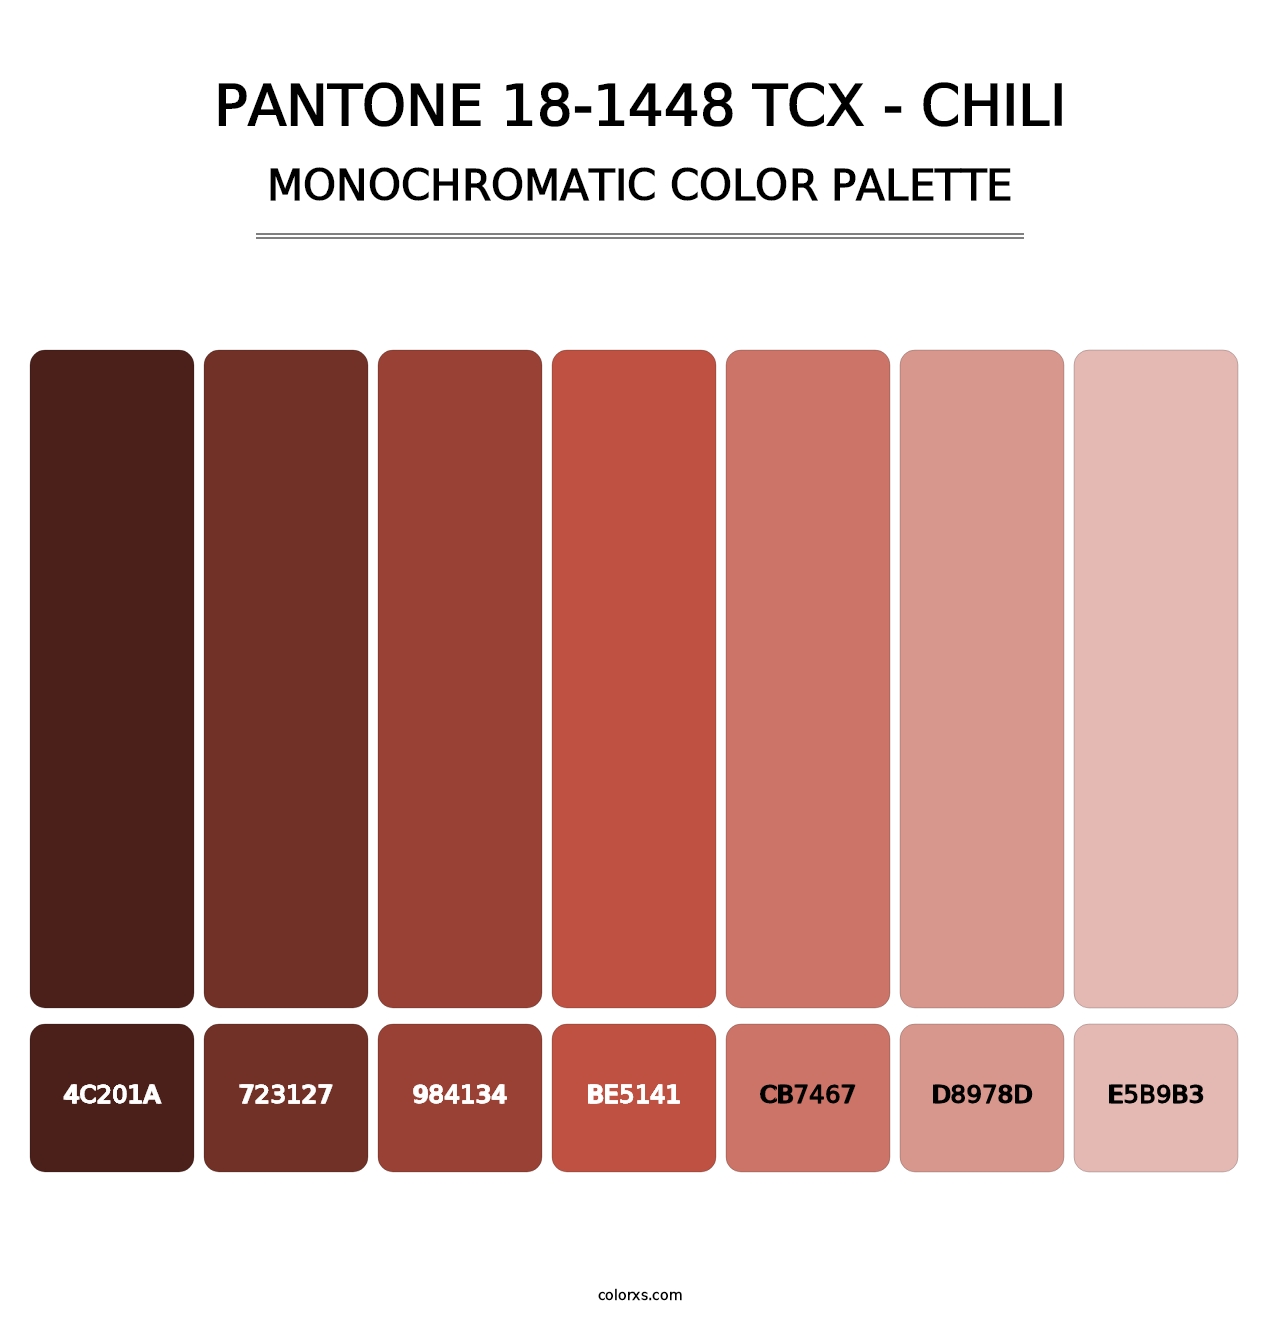 PANTONE 18-1448 TCX - Chili - Monochromatic Color Palette